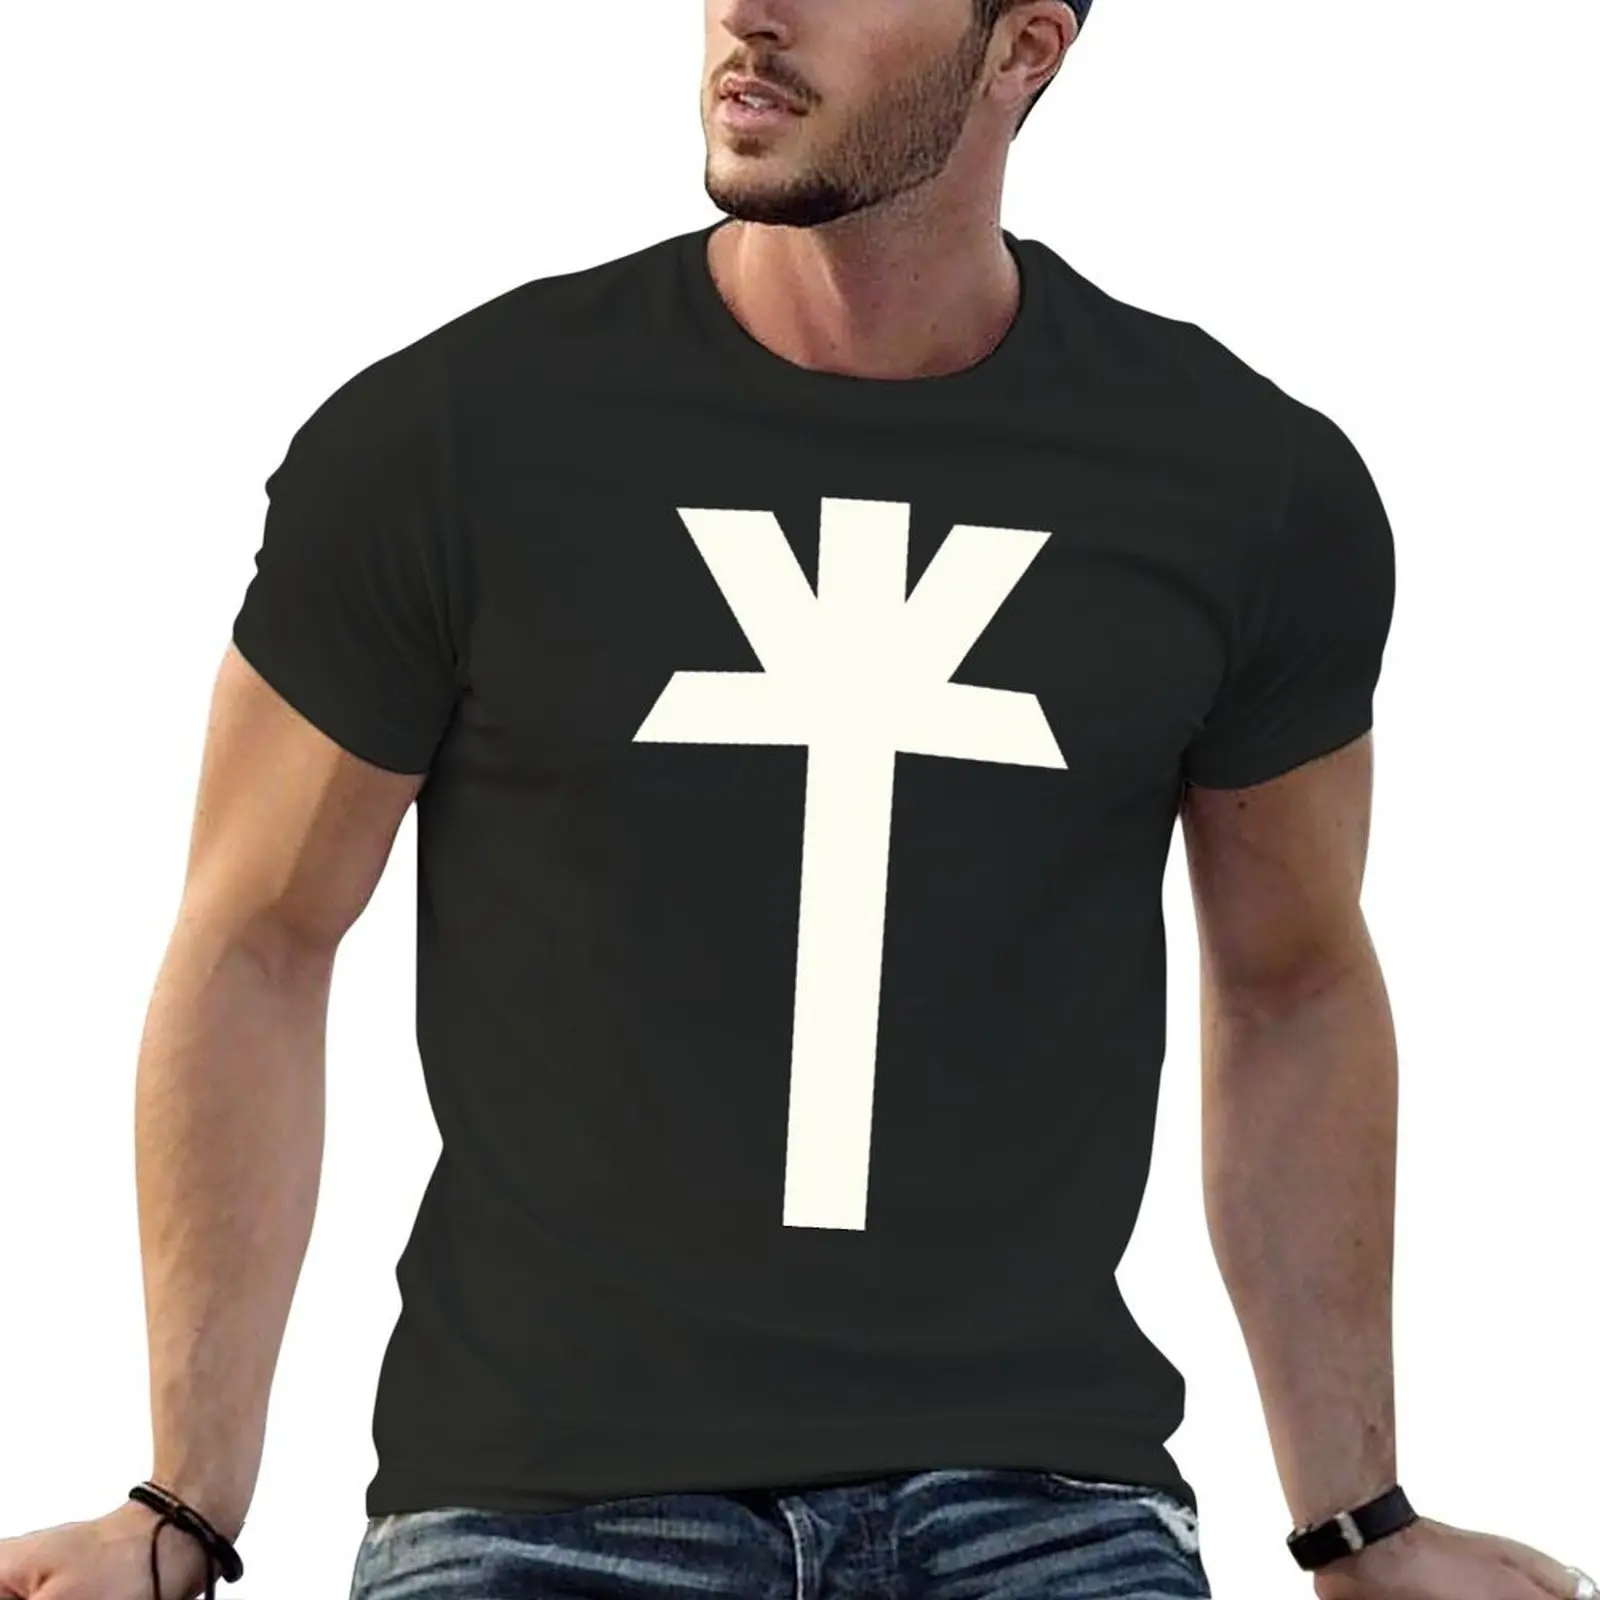 WY LYF T-Shirt cheap stuff tops graphic shirts vintage anime shirt workout shirts for men